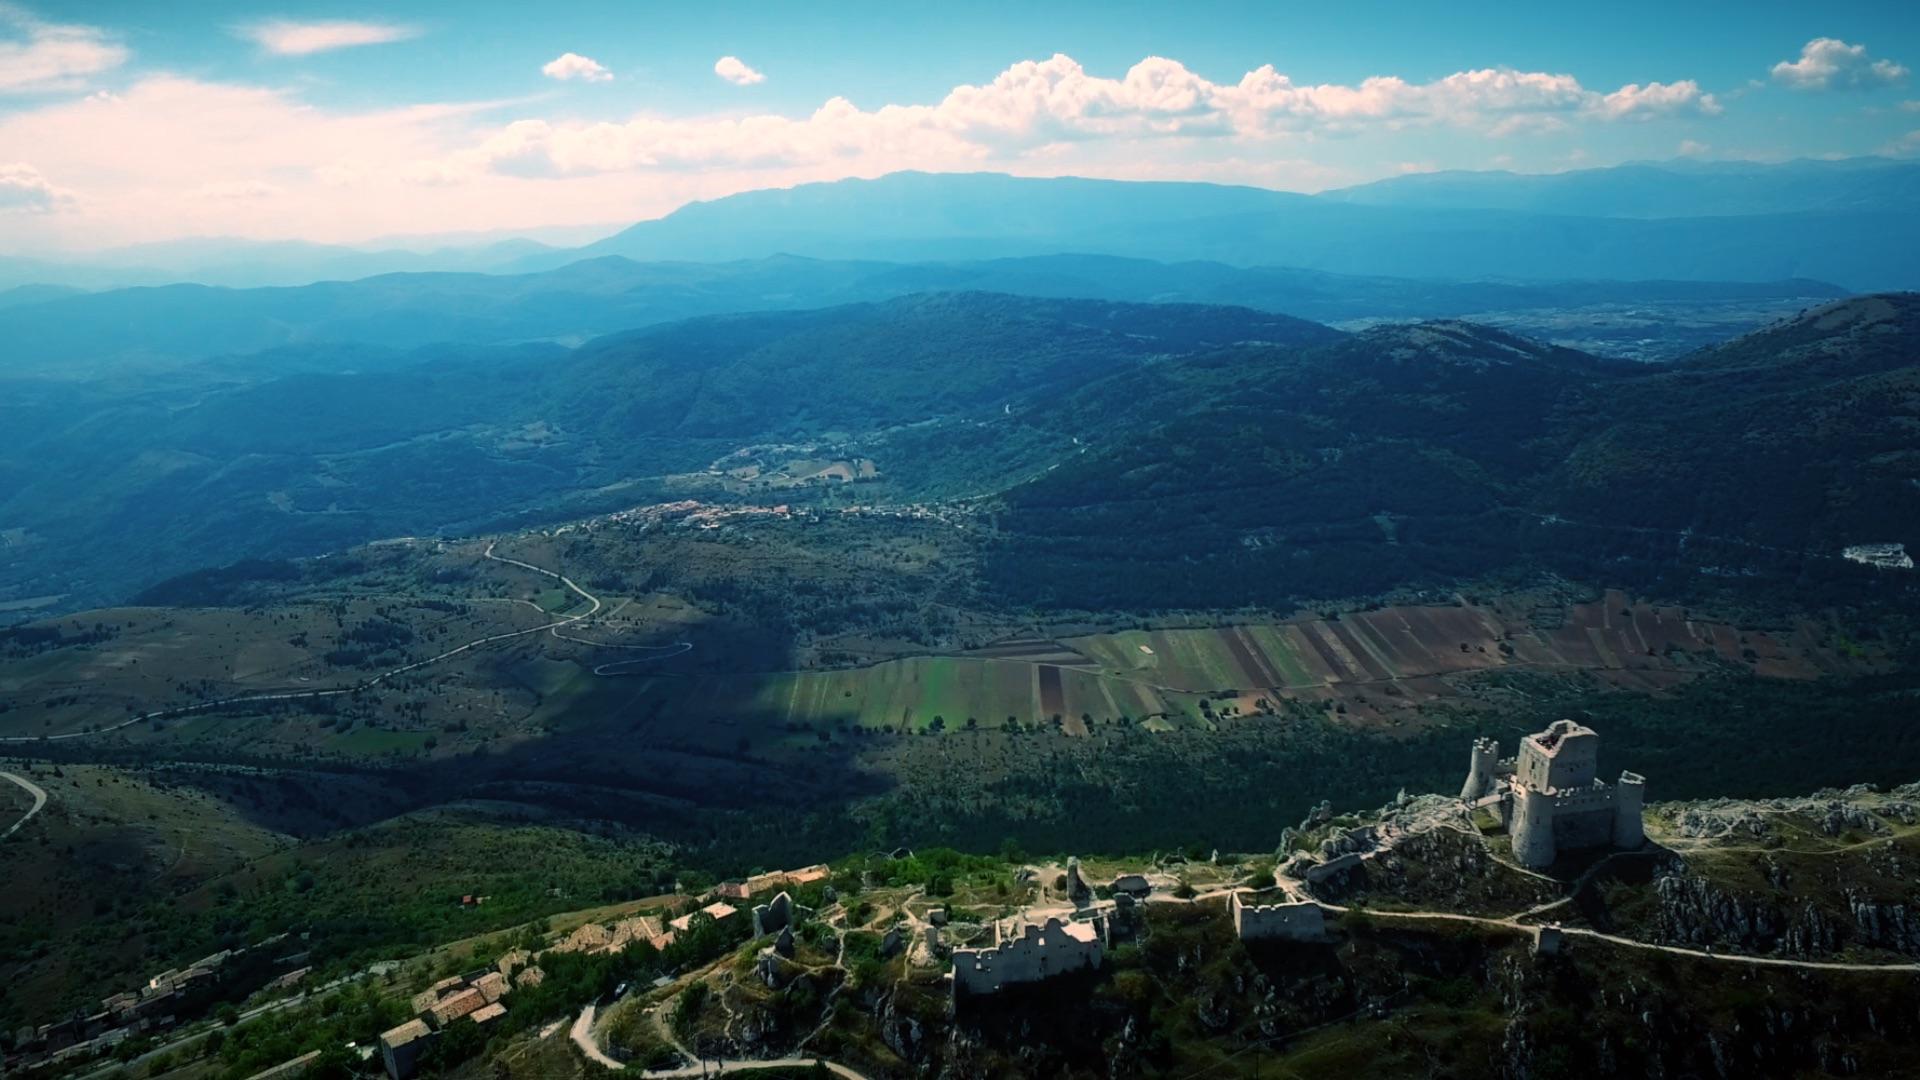 Abruzzo's landscape is pristine, yet nobody visits